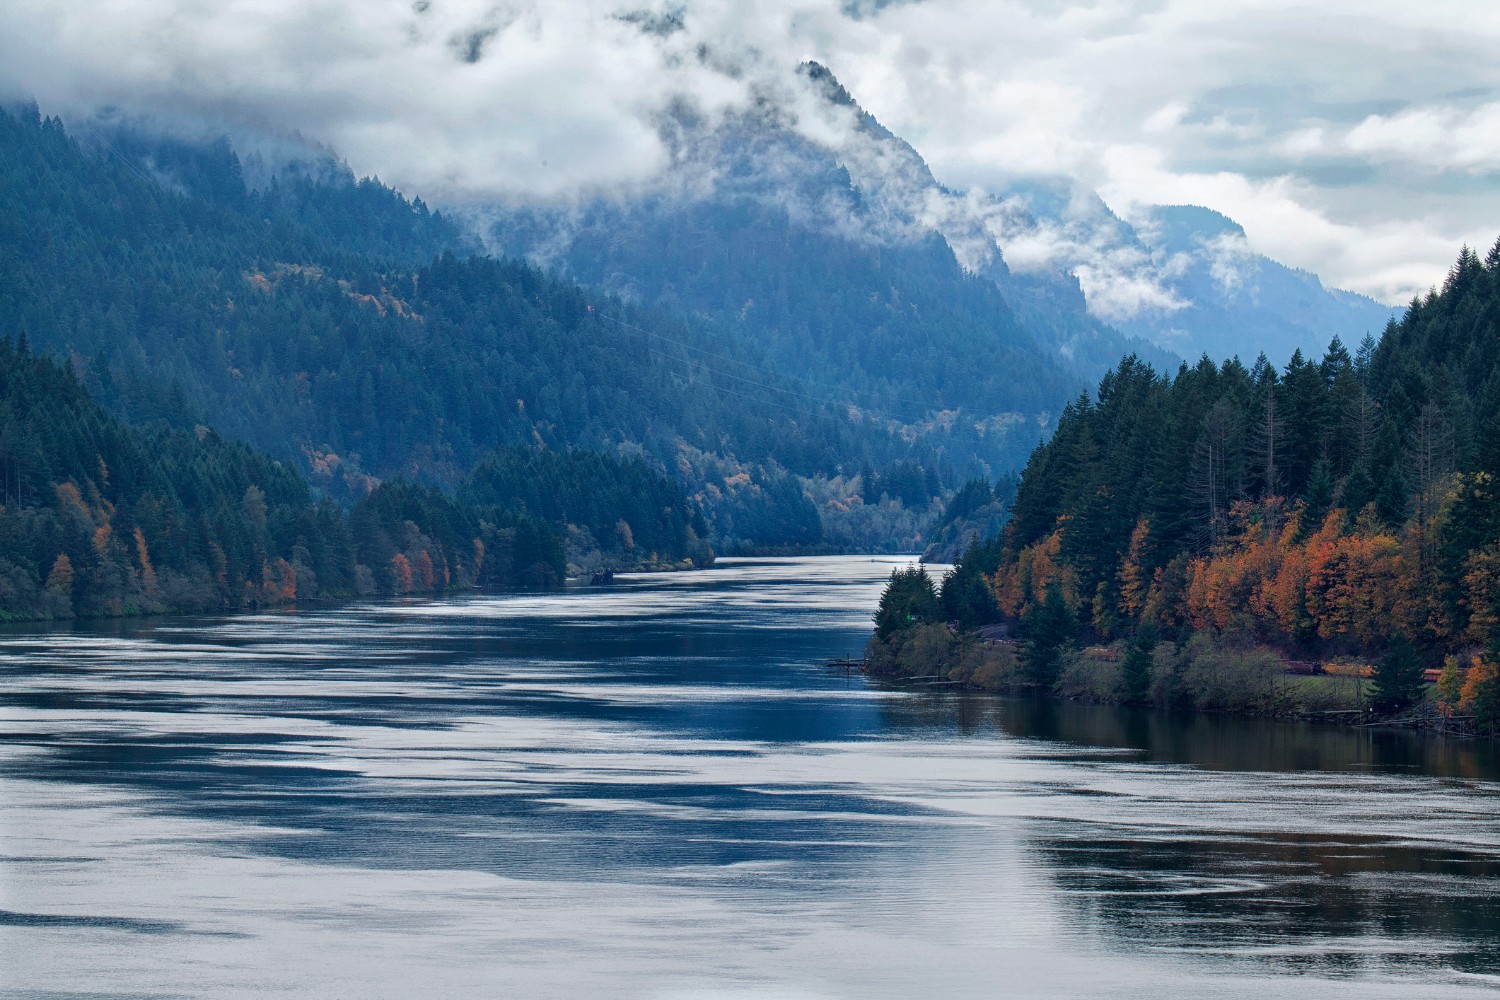 River winding through scenic Washington